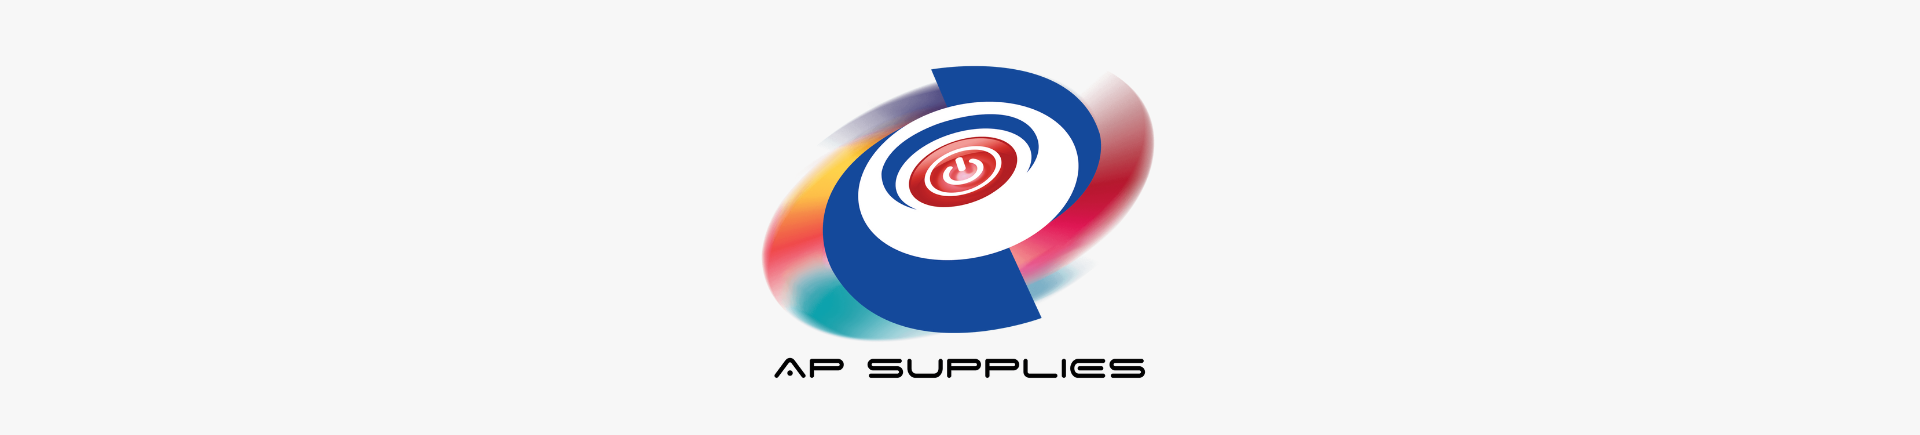 AP Supplies logo